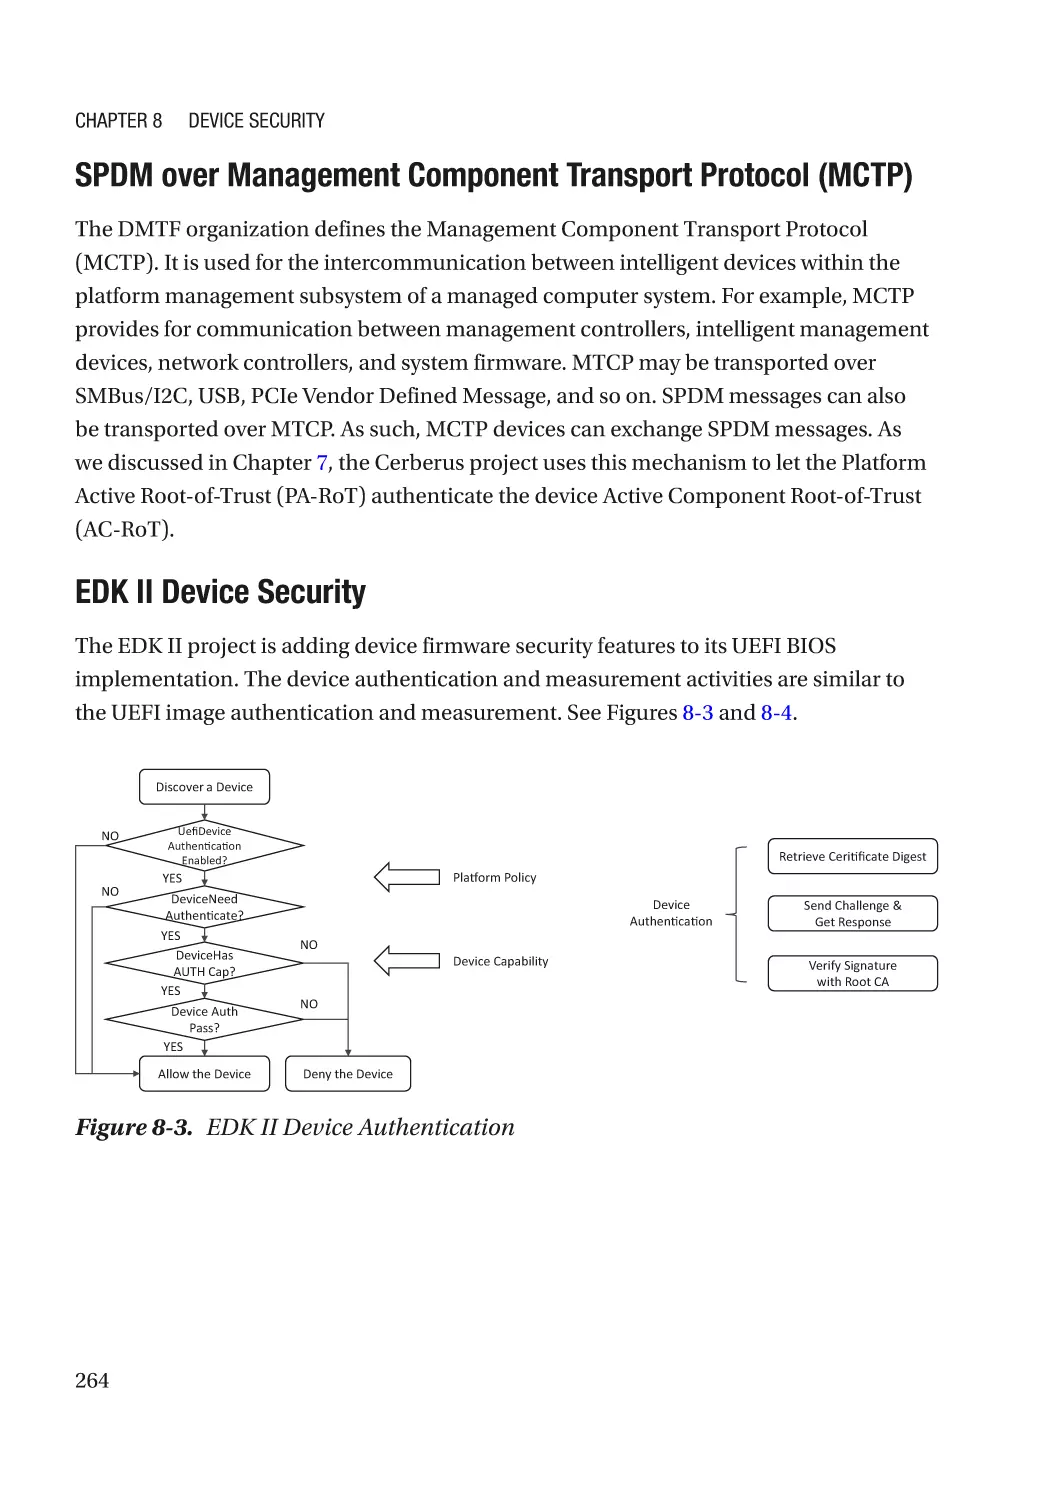 SPDM over Management Component Transport Protocol (MCTP)
EDK II Device Security